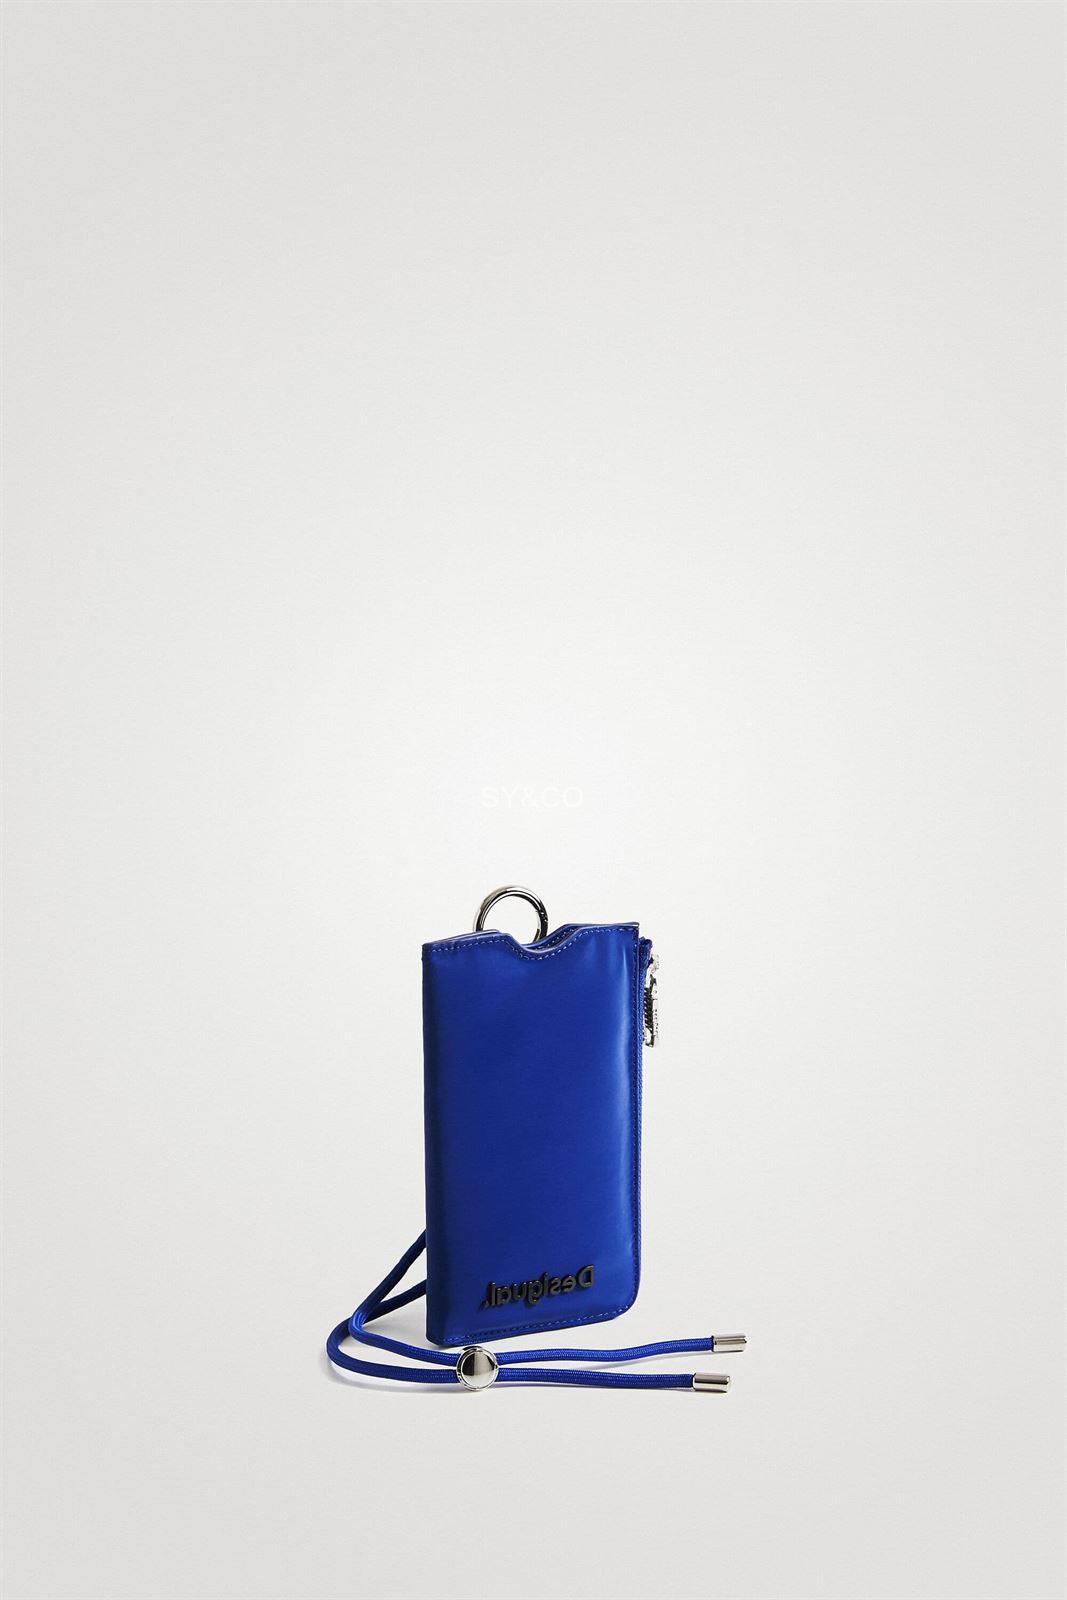 Bandolera portamovil Desigual logo Happy bag azul 22SAYA04 - Imagen 3